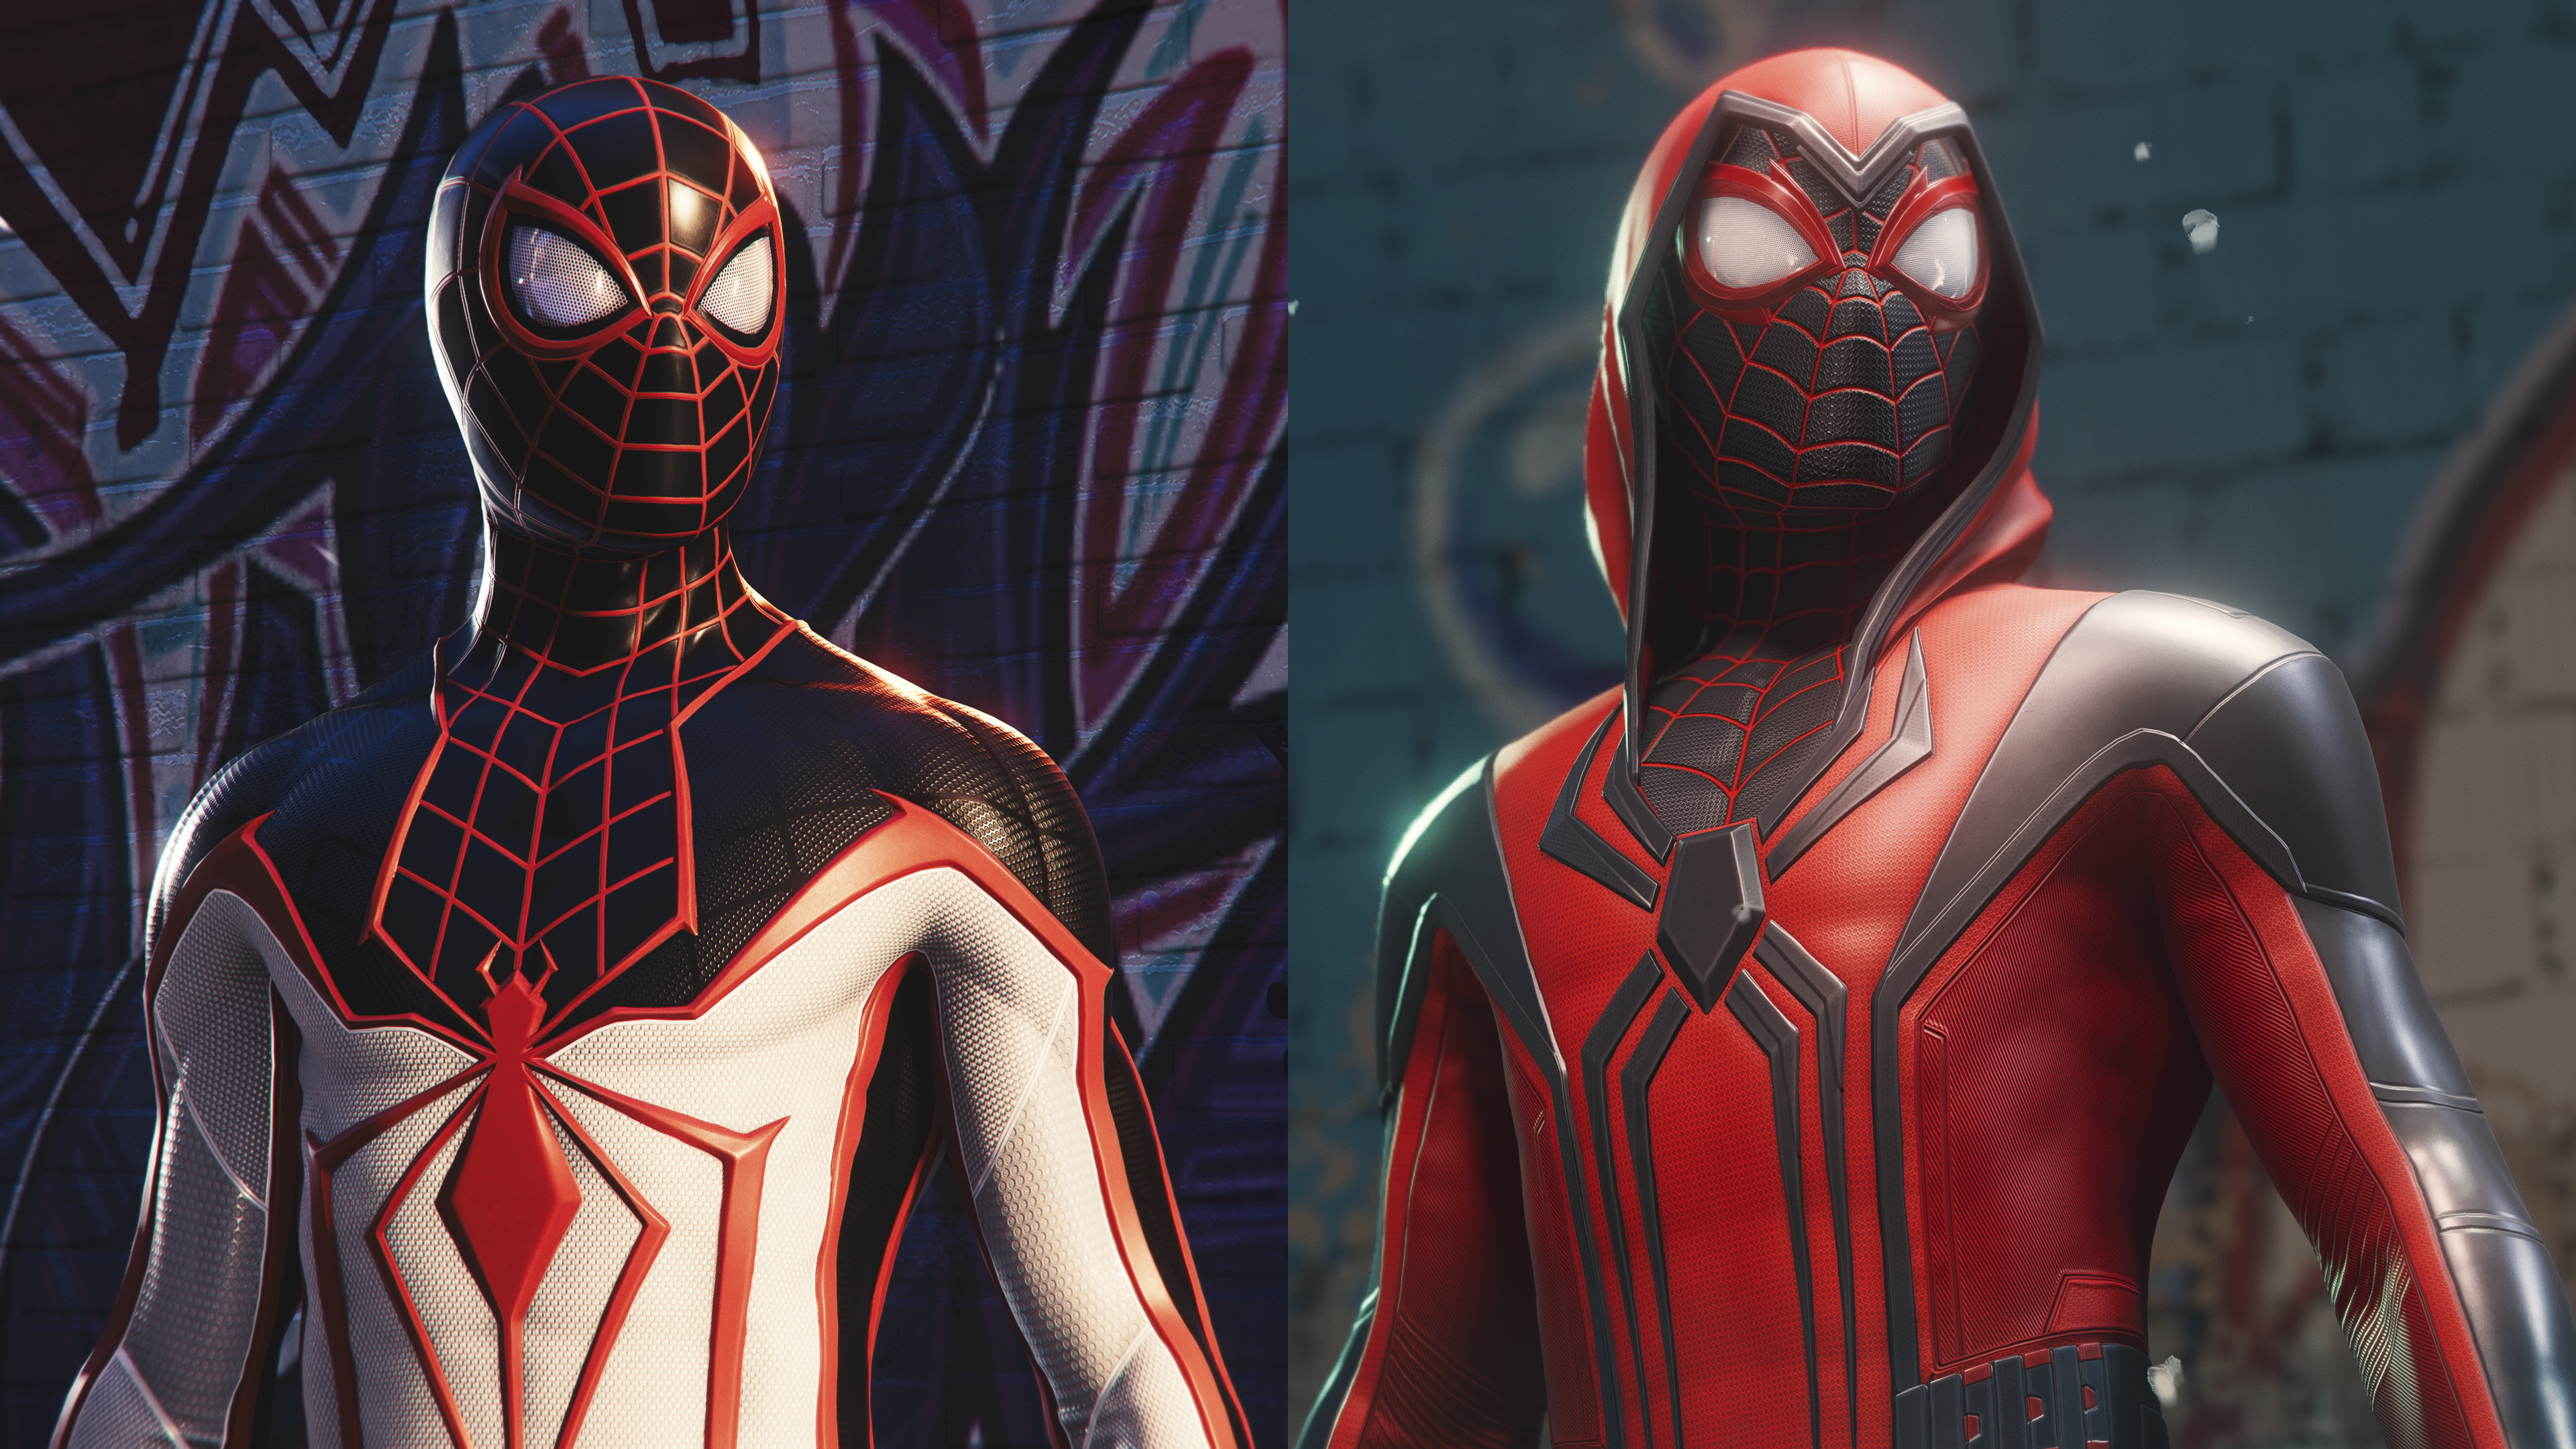 Marvel's Человек-паук: Майлз Моралес – Дейли Бьюгл – Красный гигант позеленел – снимок экрана